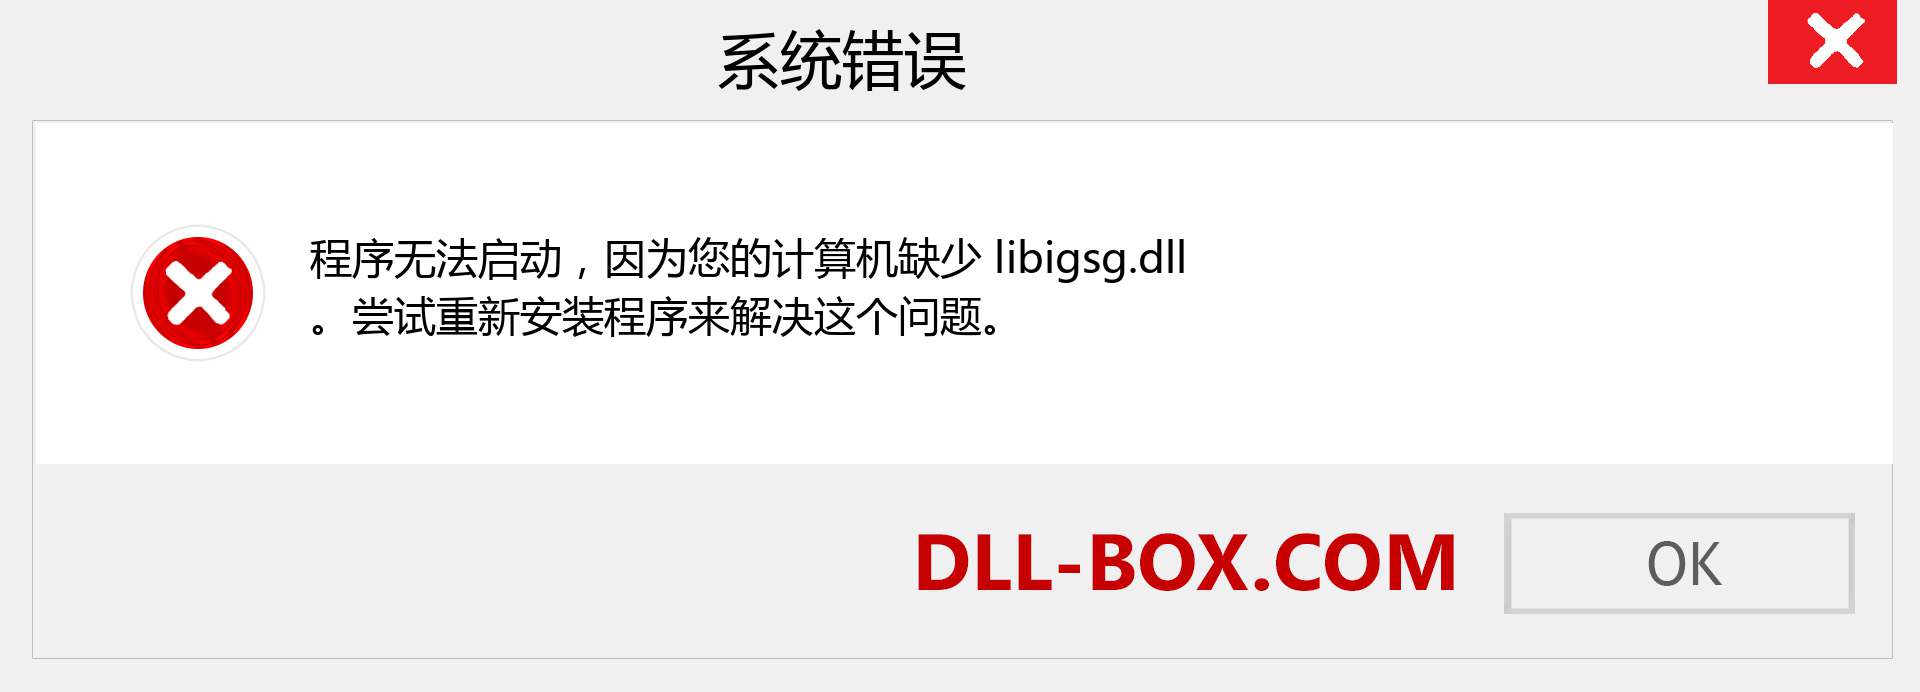 libigsg.dll 文件丢失？。 适用于 Windows 7、8、10 的下载 - 修复 Windows、照片、图像上的 libigsg dll 丢失错误